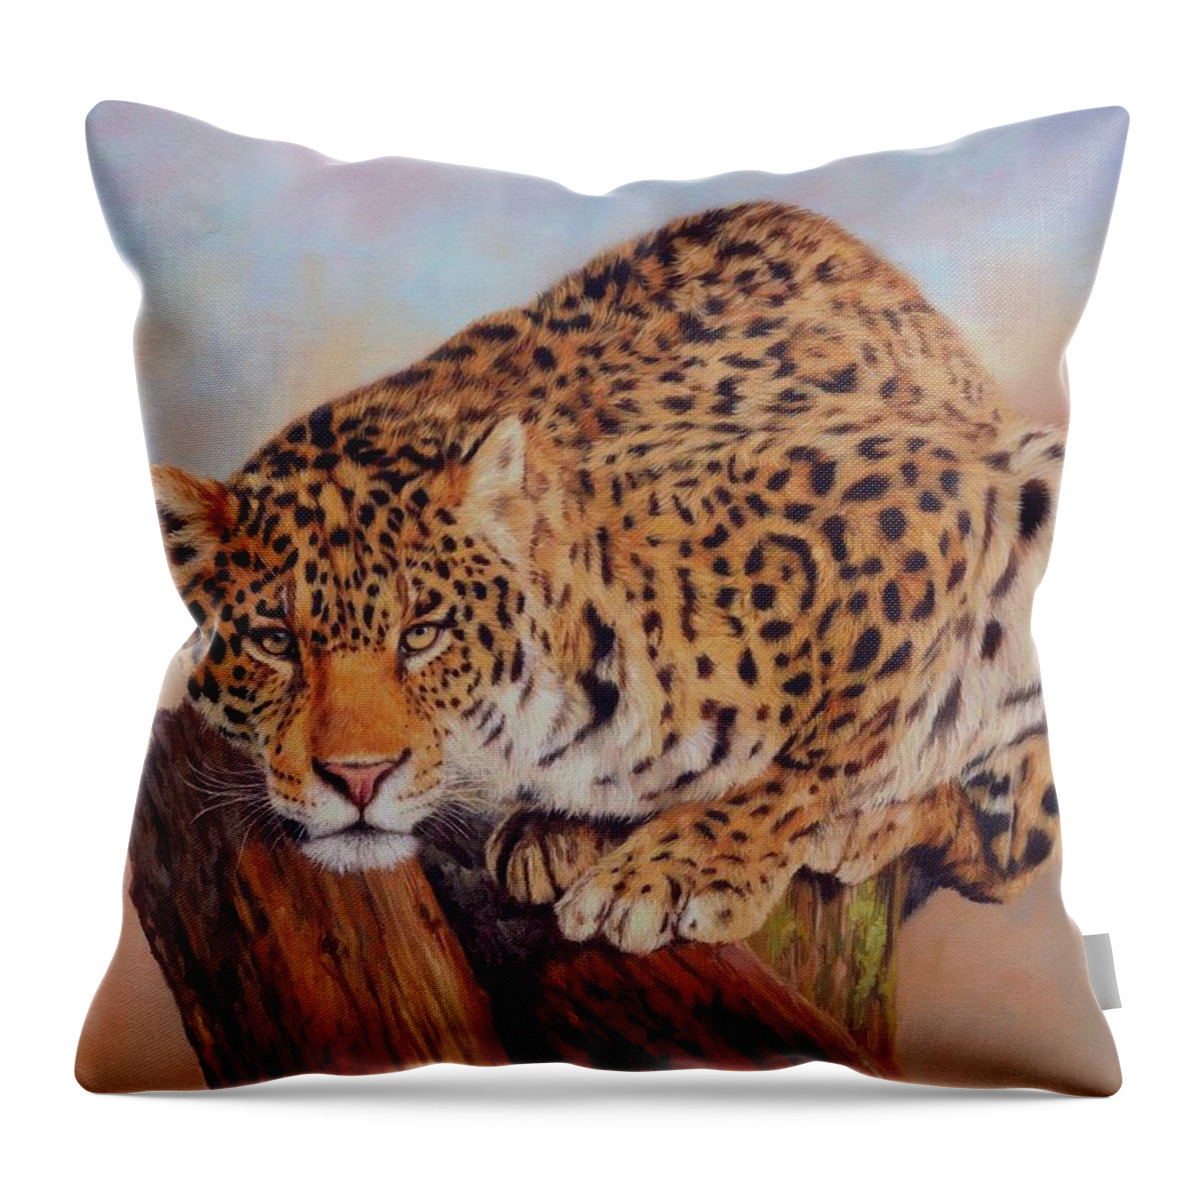 Jaguar Throw Pillow featuring the painting Jaguar by David Stribbling